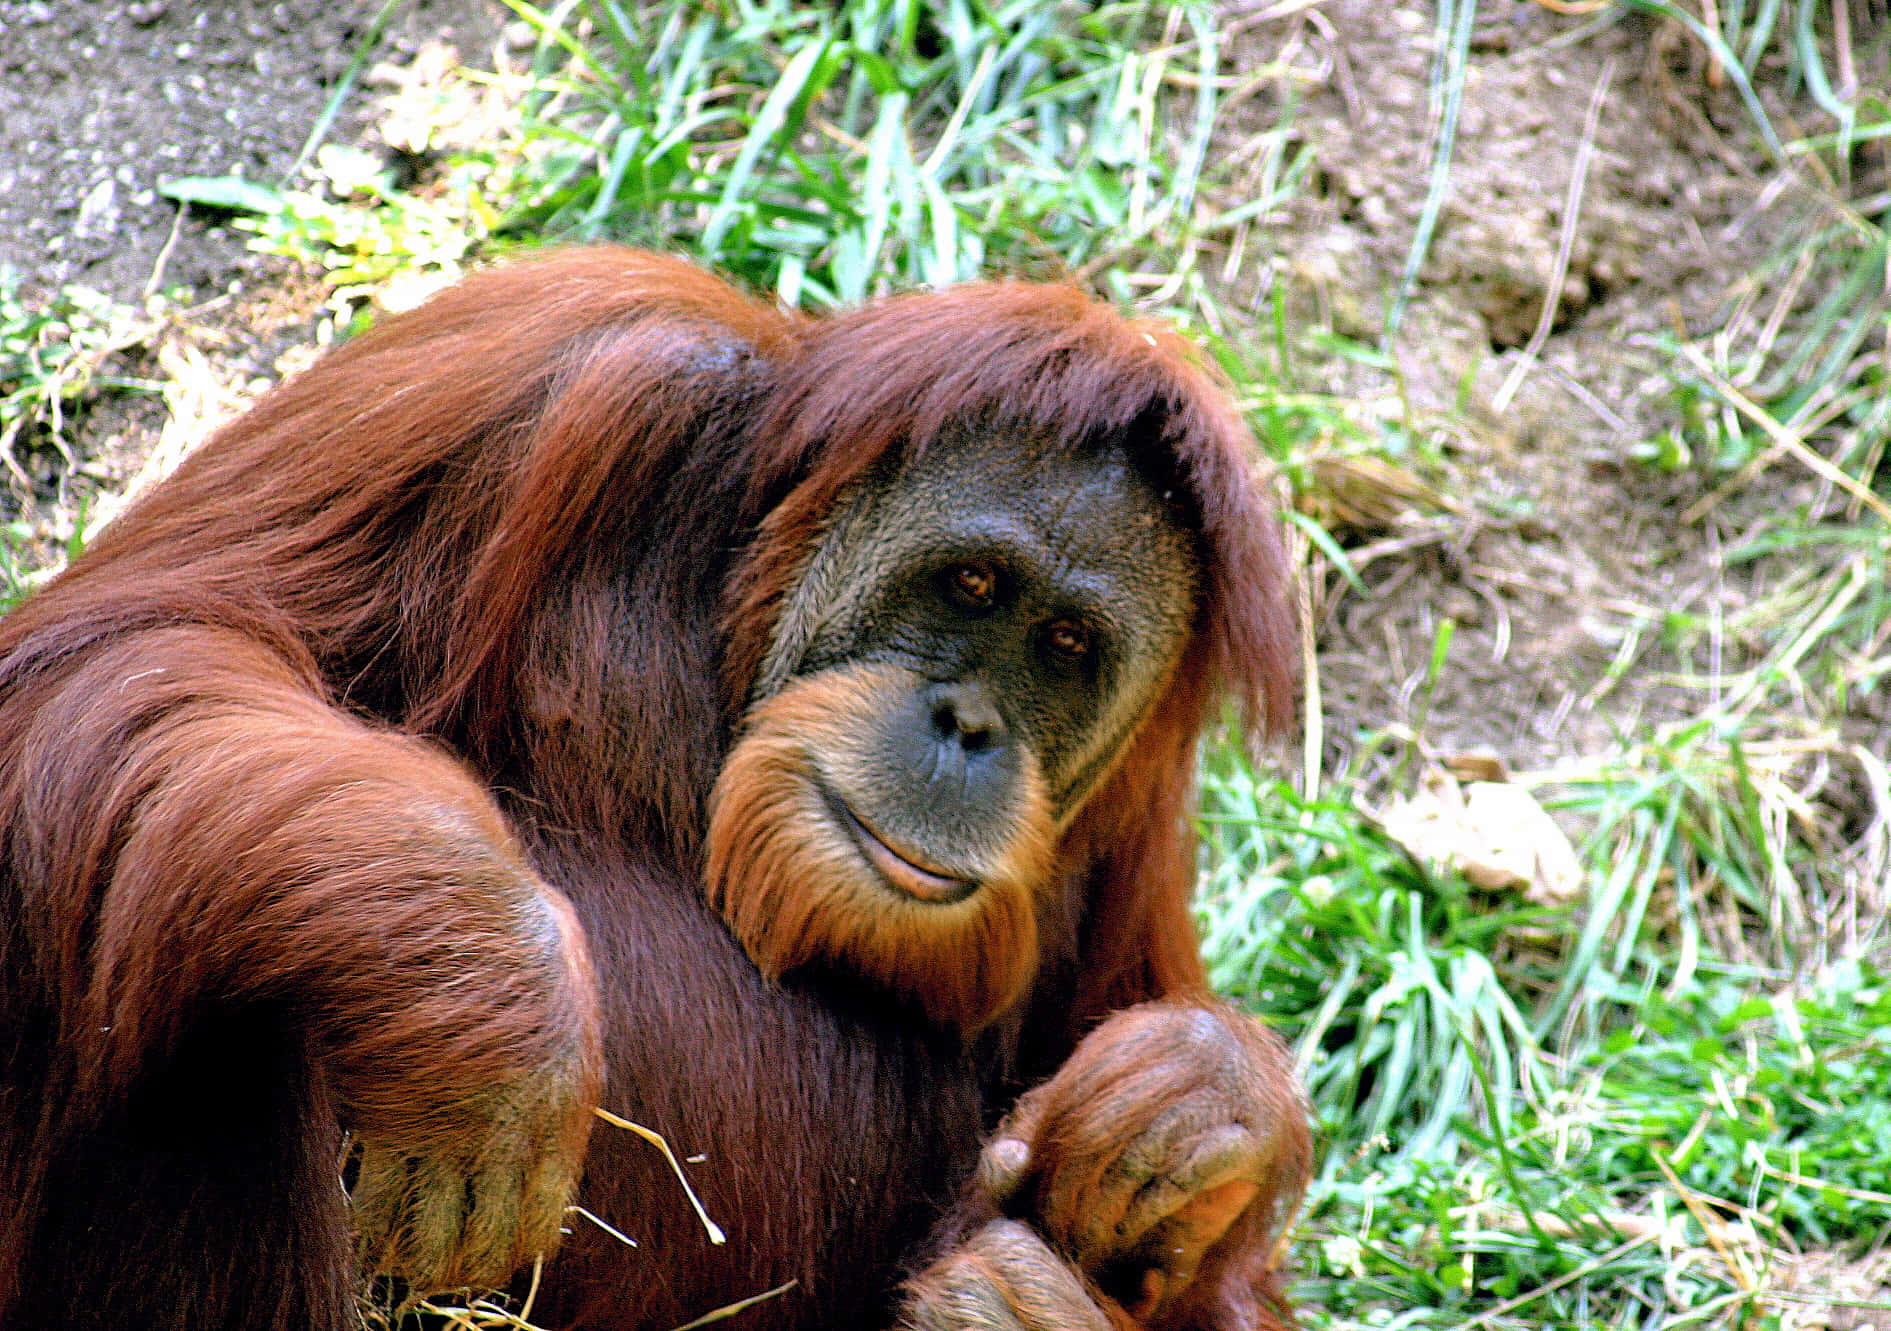 A Brown Orangutan Sitting On The Ground